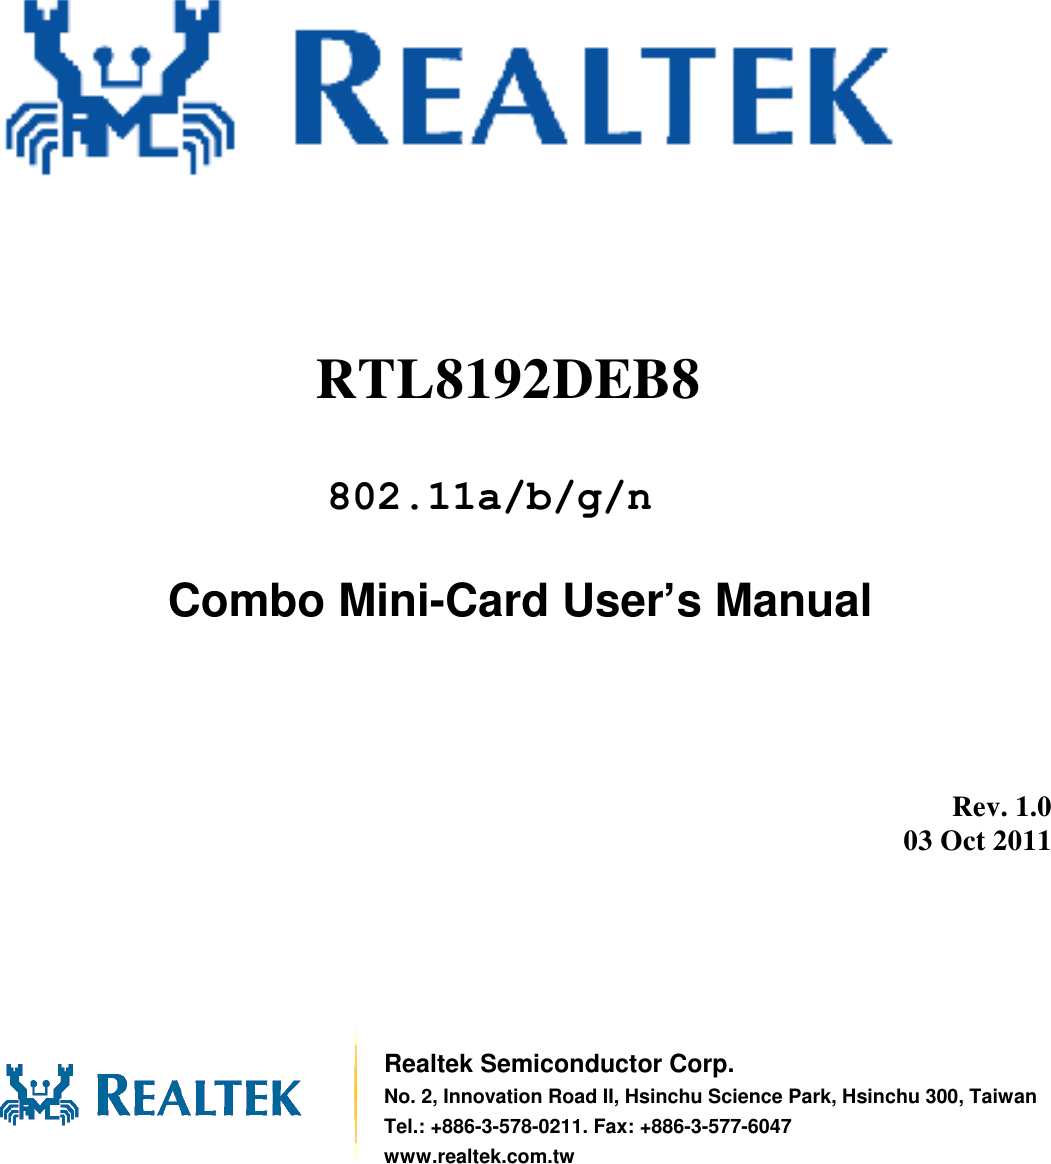                Combo Mini-Card User’s Manual          Rev. 1.0 03 Oct 2011        Realtek Semiconductor Corp. No. 2, Innovation Road II, Hsinchu Science Park, Hsinchu 300, Taiwan Tel.: +886-3-578-0211. Fax: +886-3-577-6047 www.realtek.com.tw RTL8192DEB8  802.11a/b/g/n